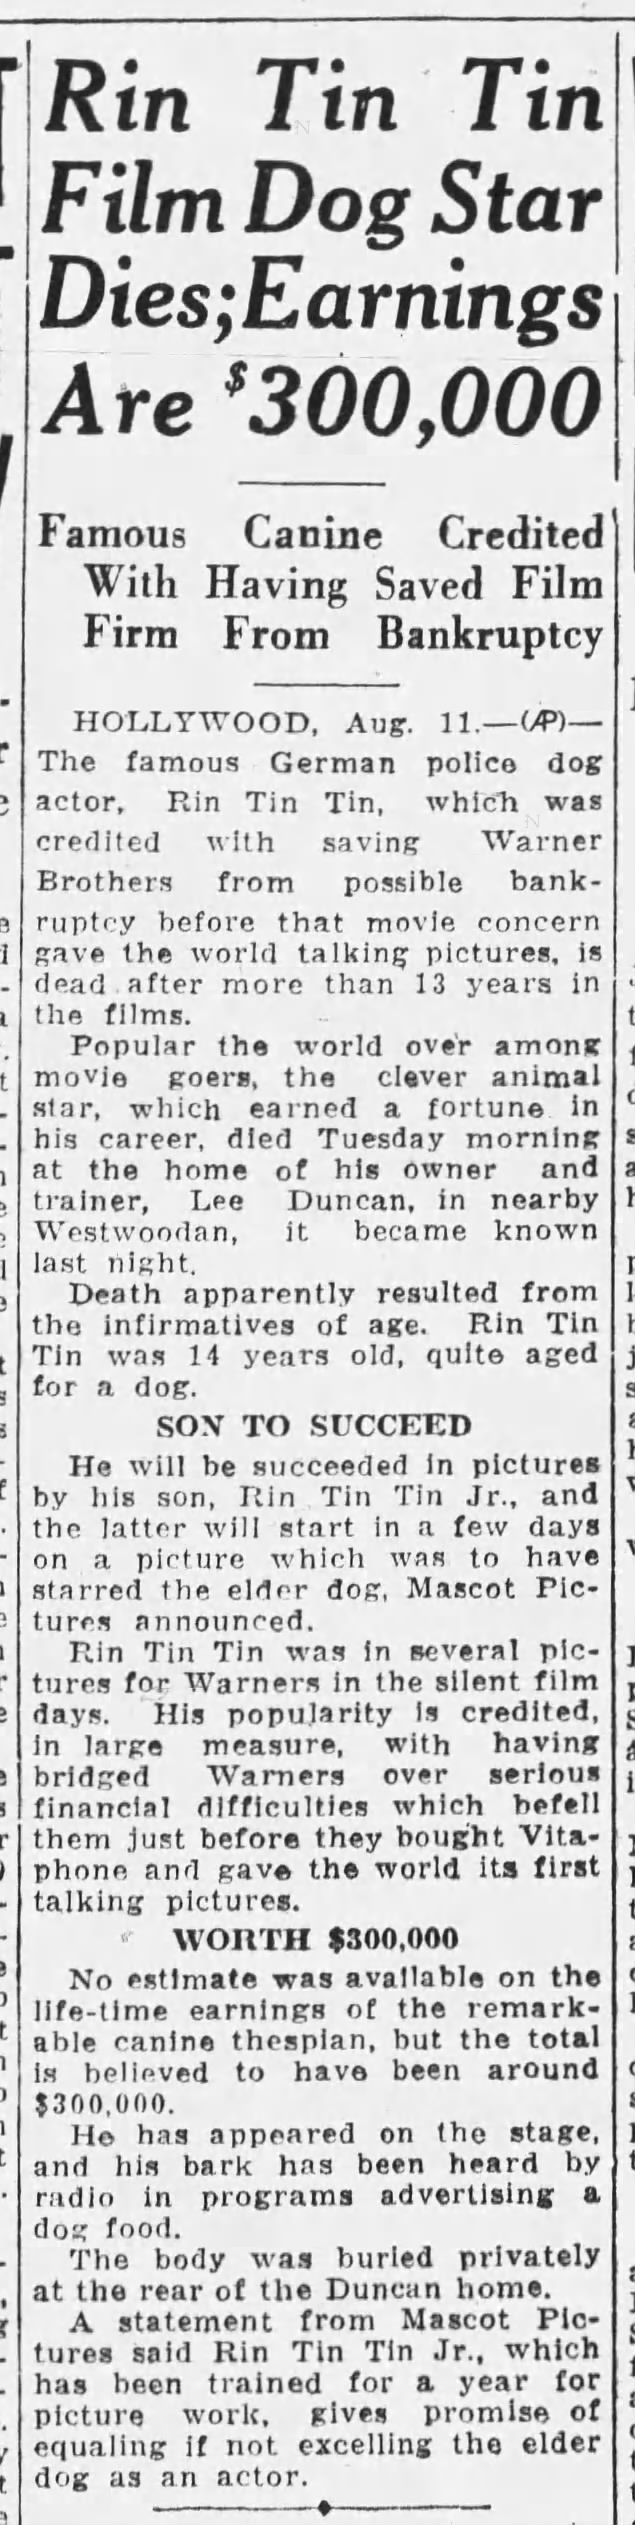 1932 death notice for German shepherd Rin Tin Tin Senior.